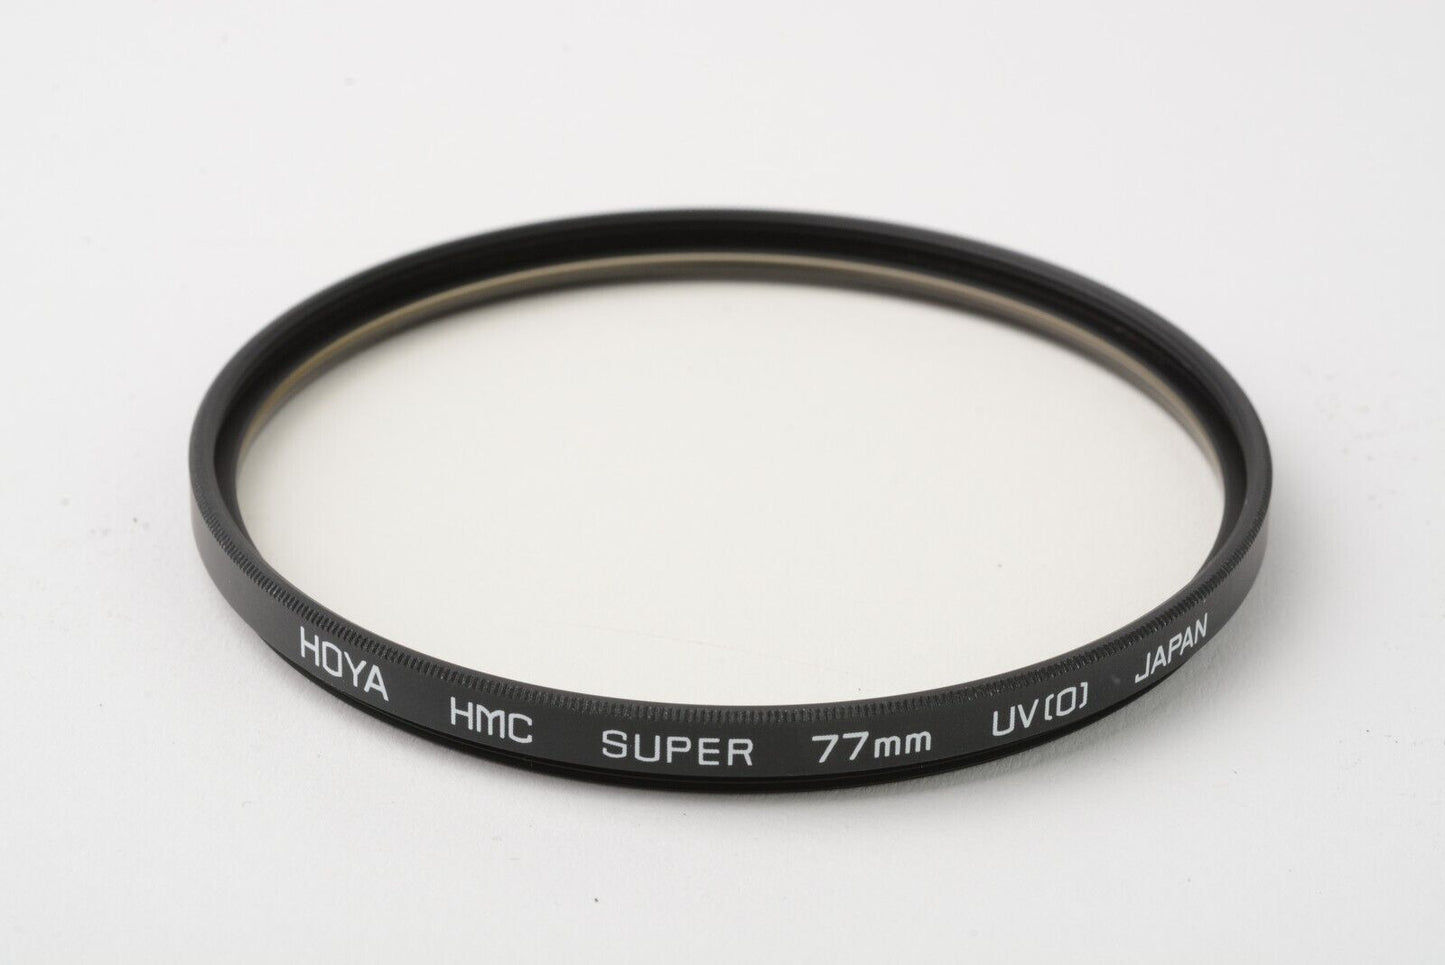 MINT HOYA SUPER HMC PRO 1 77mm UV FILTER IN JEWEL CASE